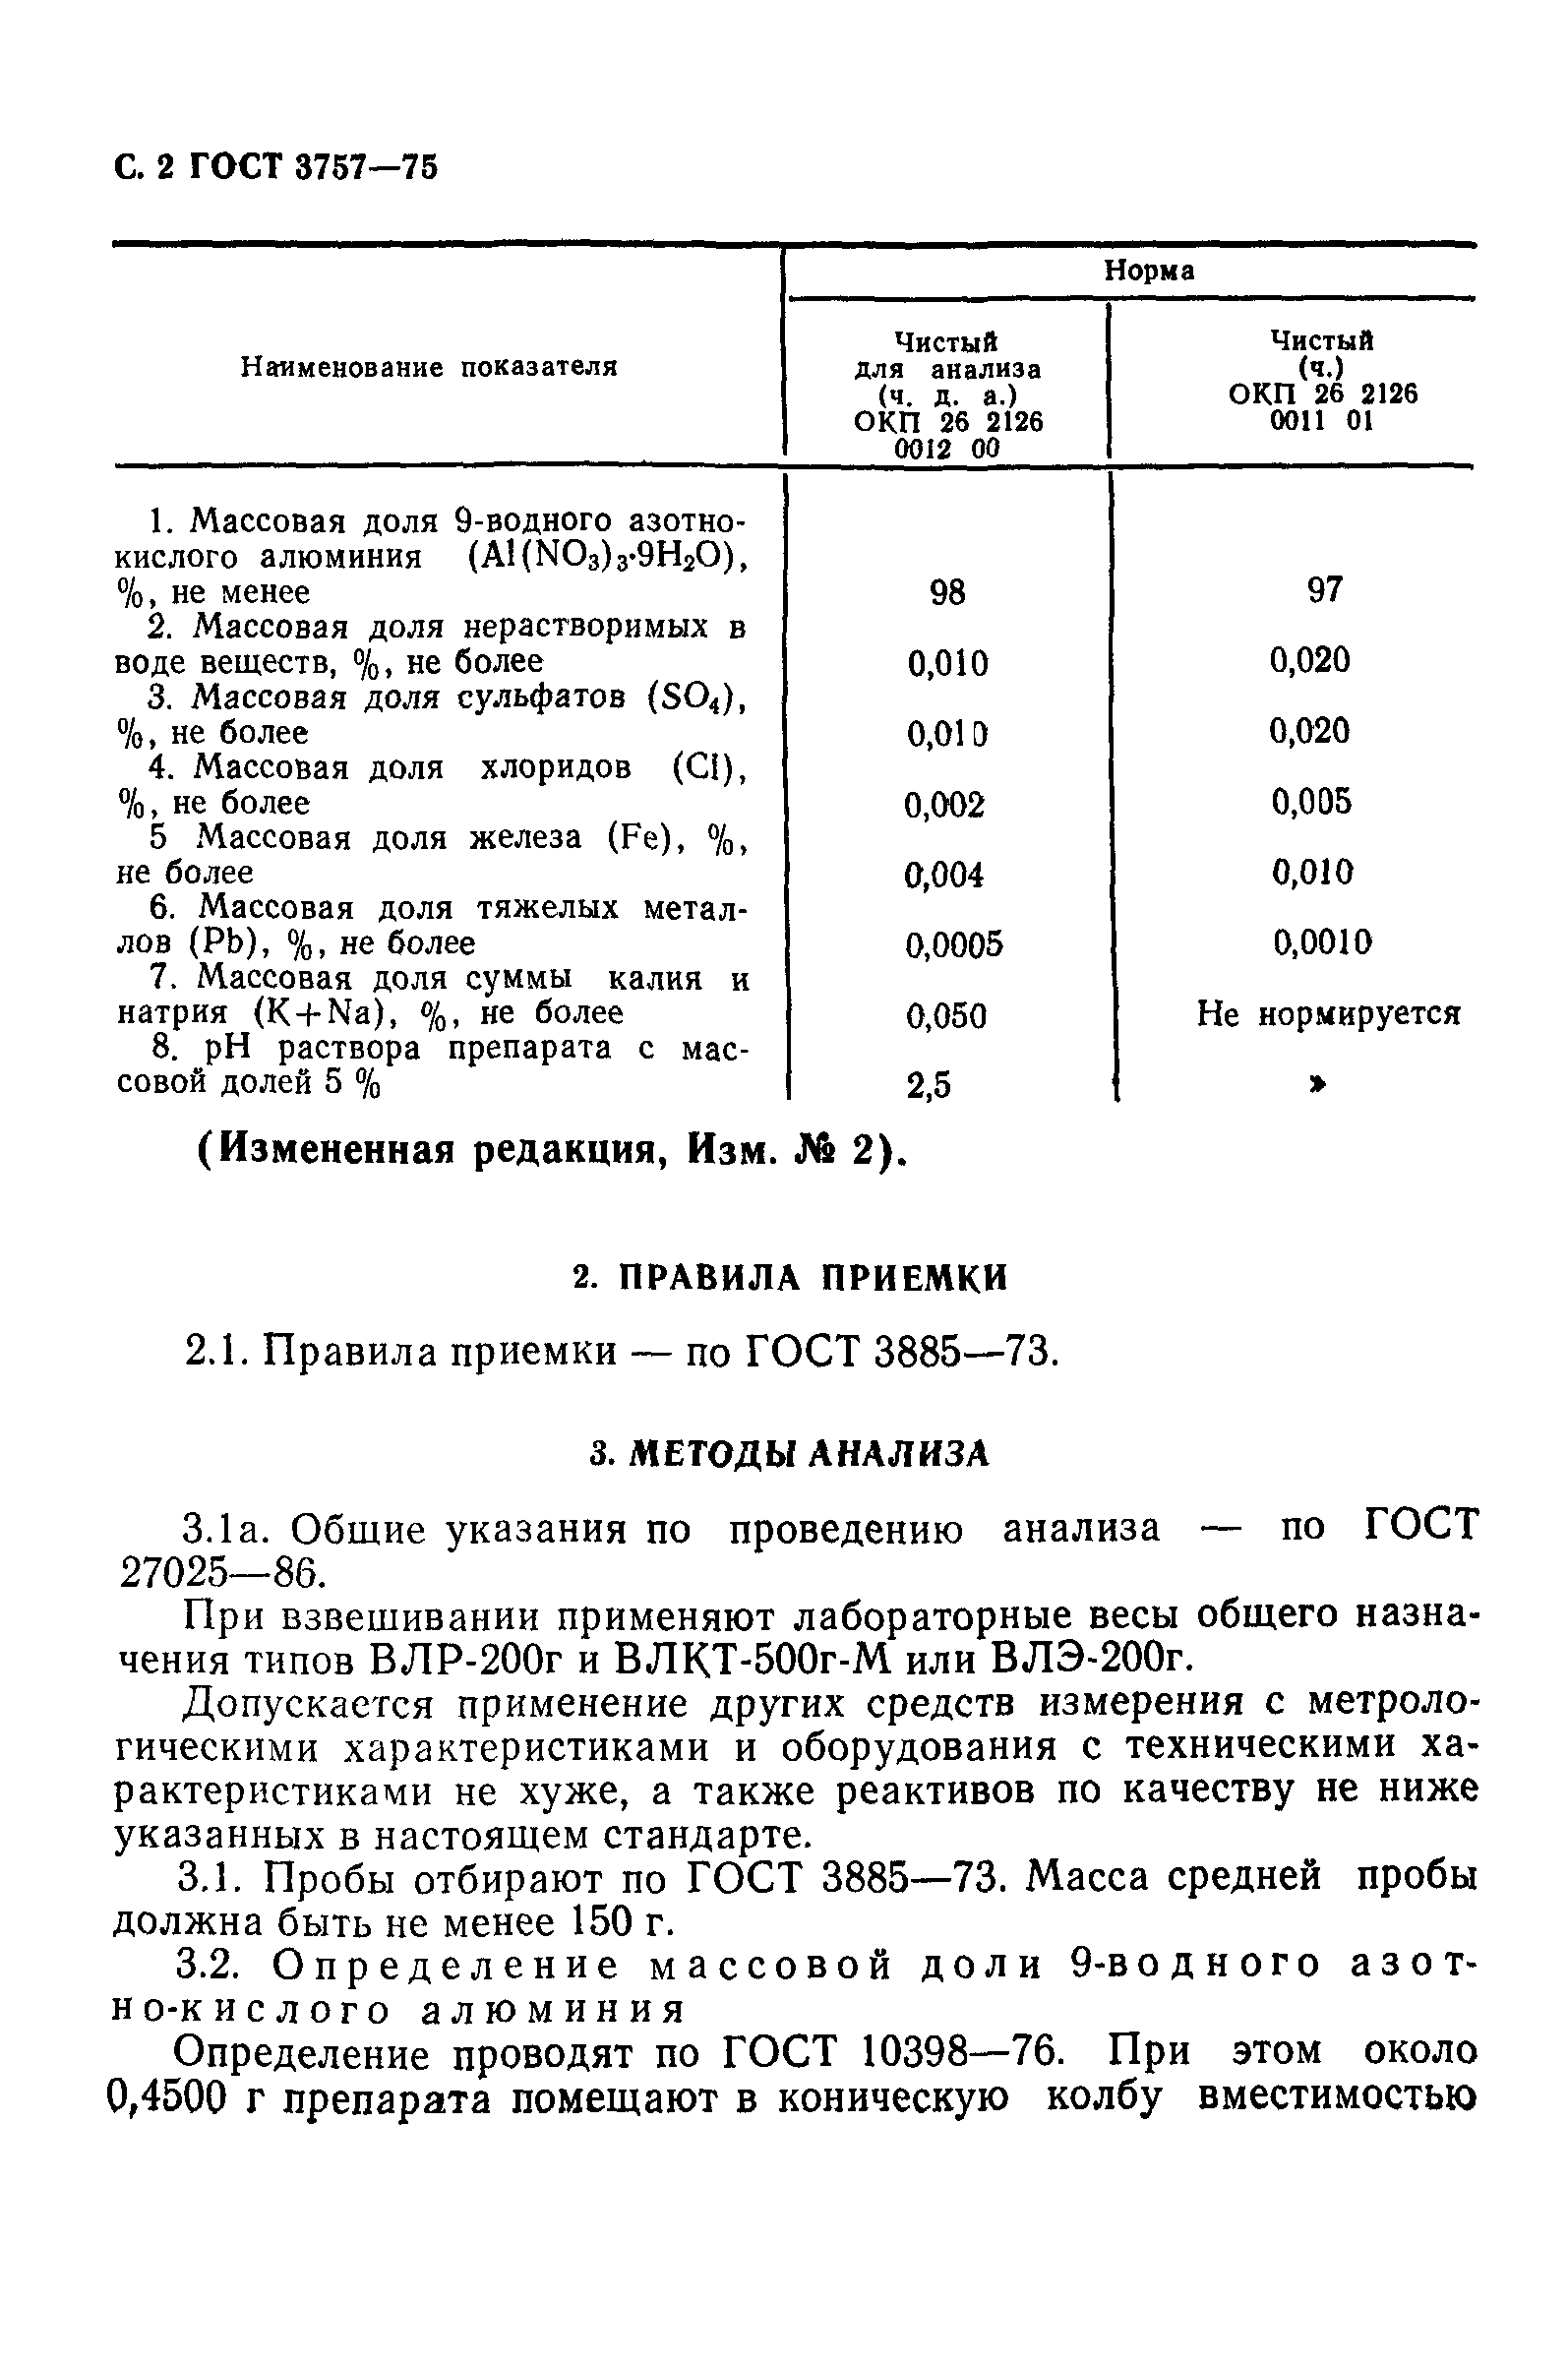 ГОСТ 3757-75